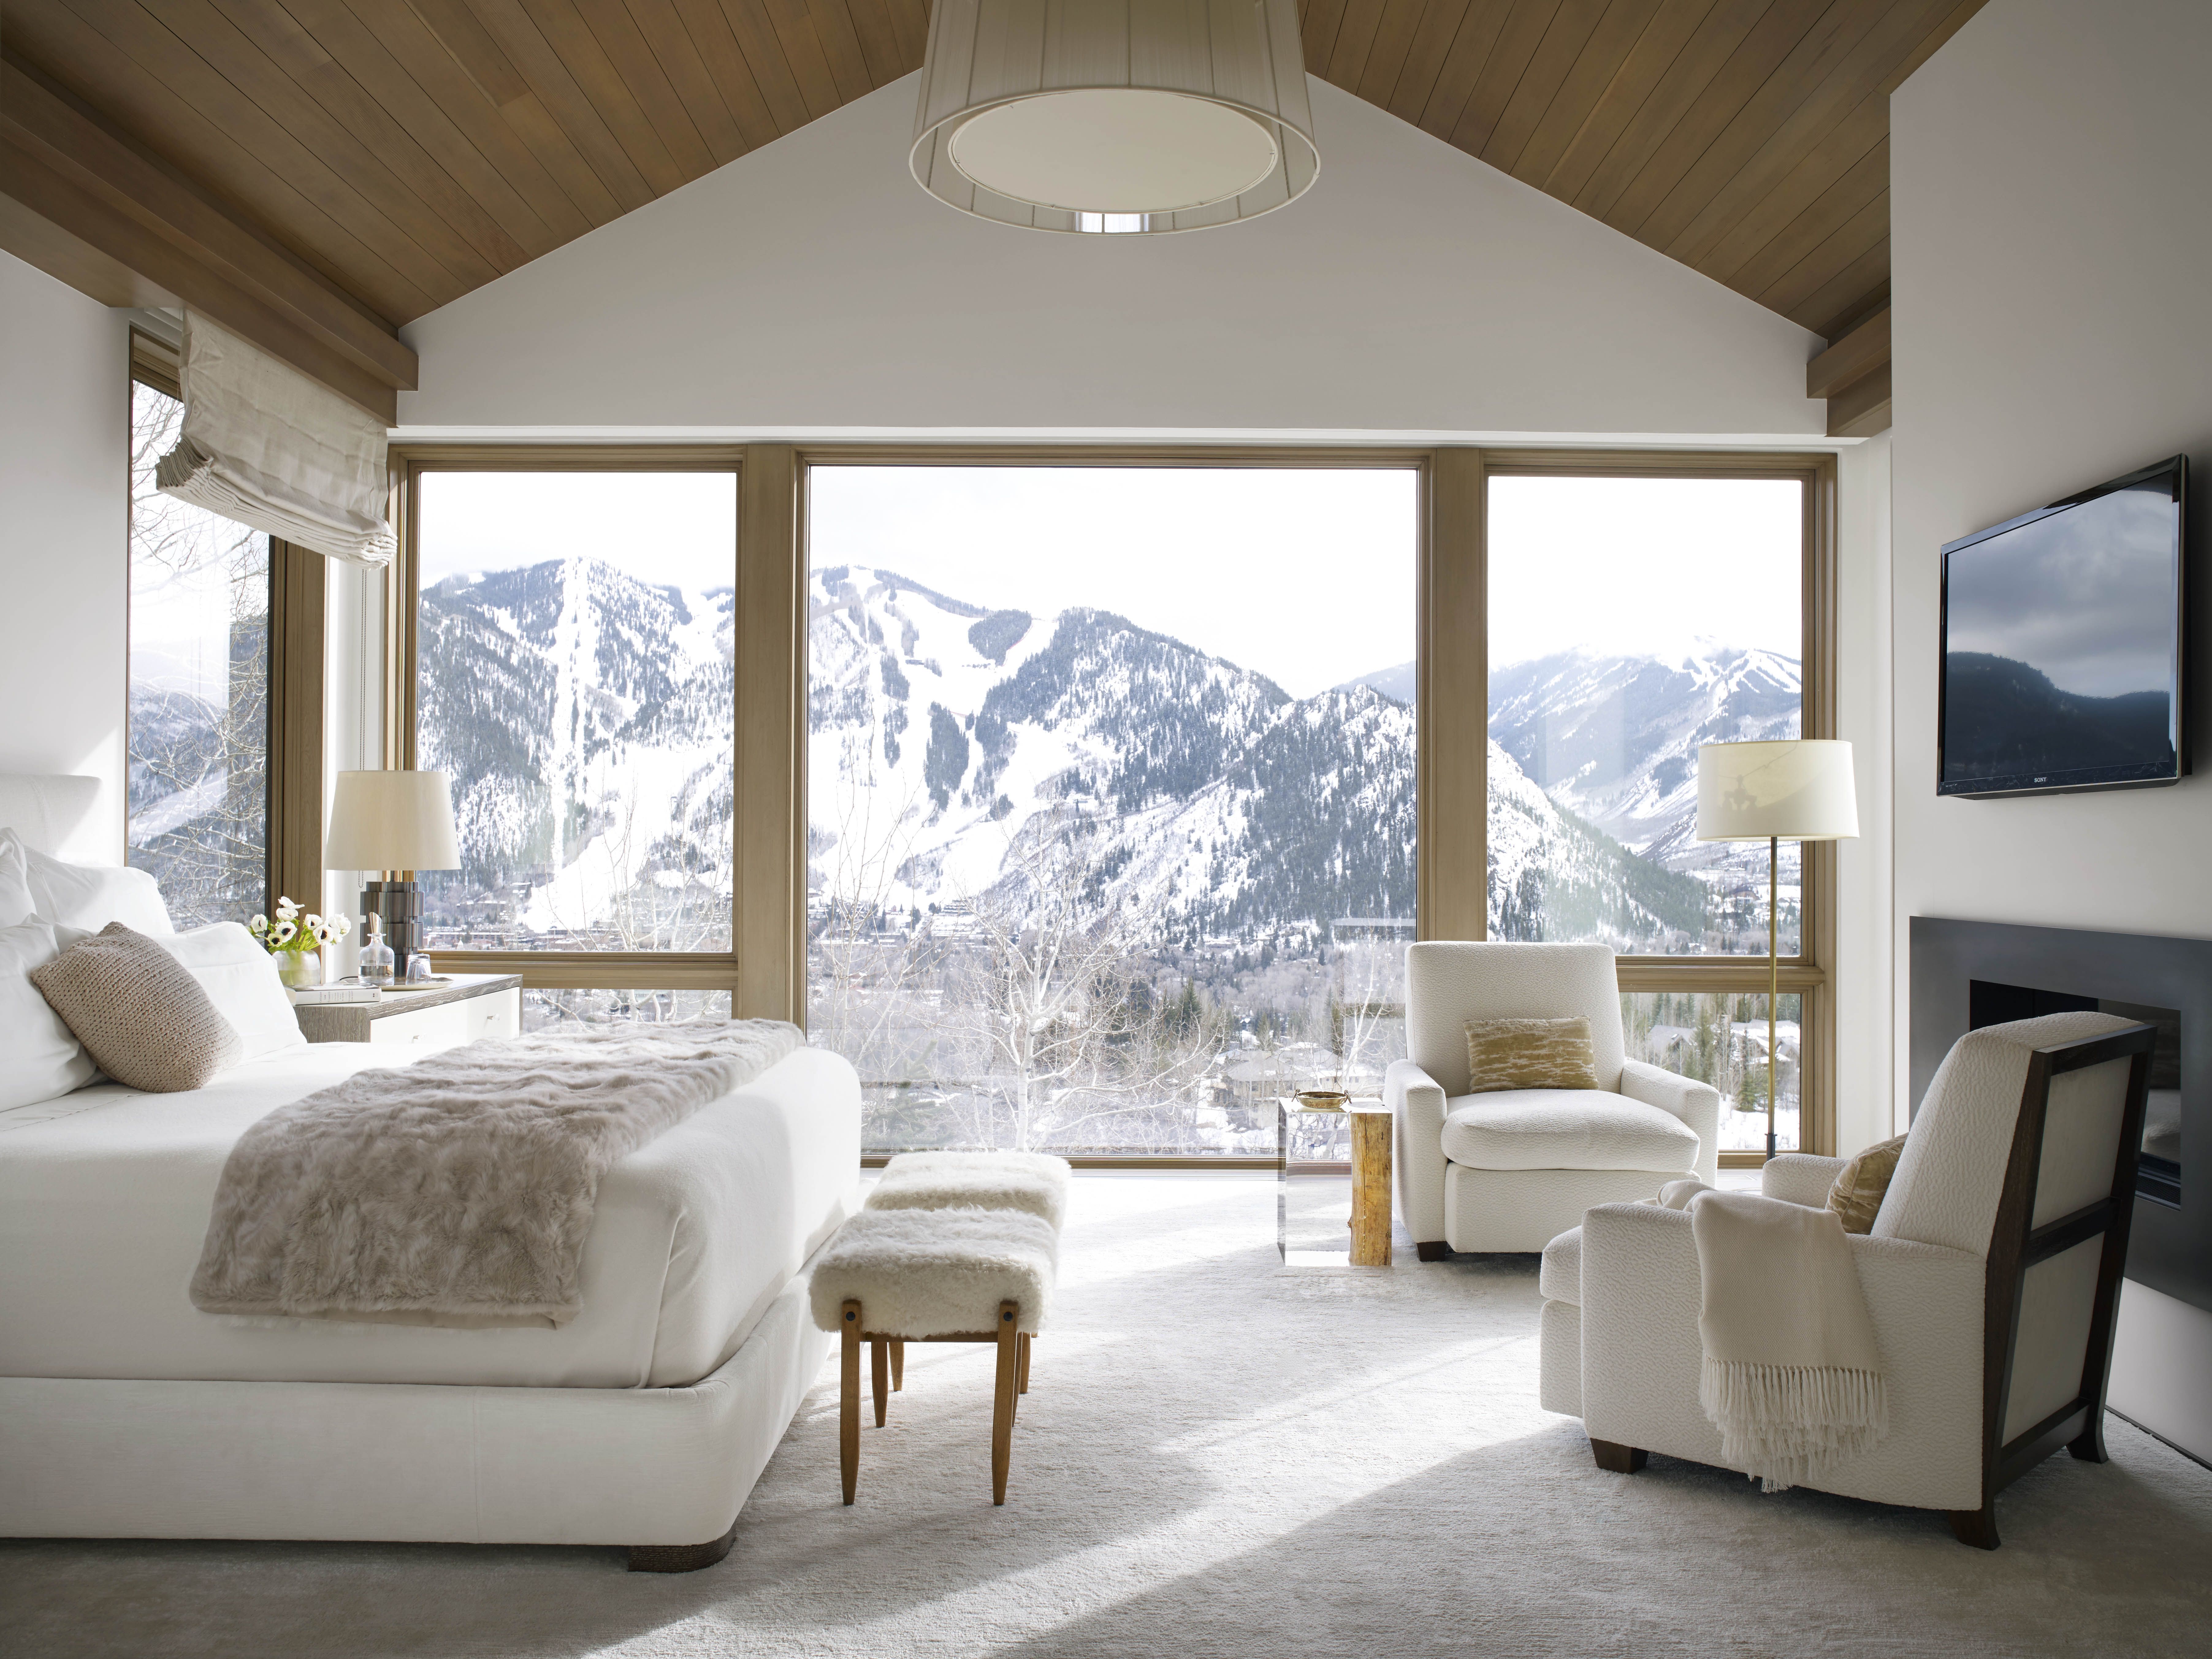 25 White Bedroom Ideas Luxury White Bedroom Designs And Decor